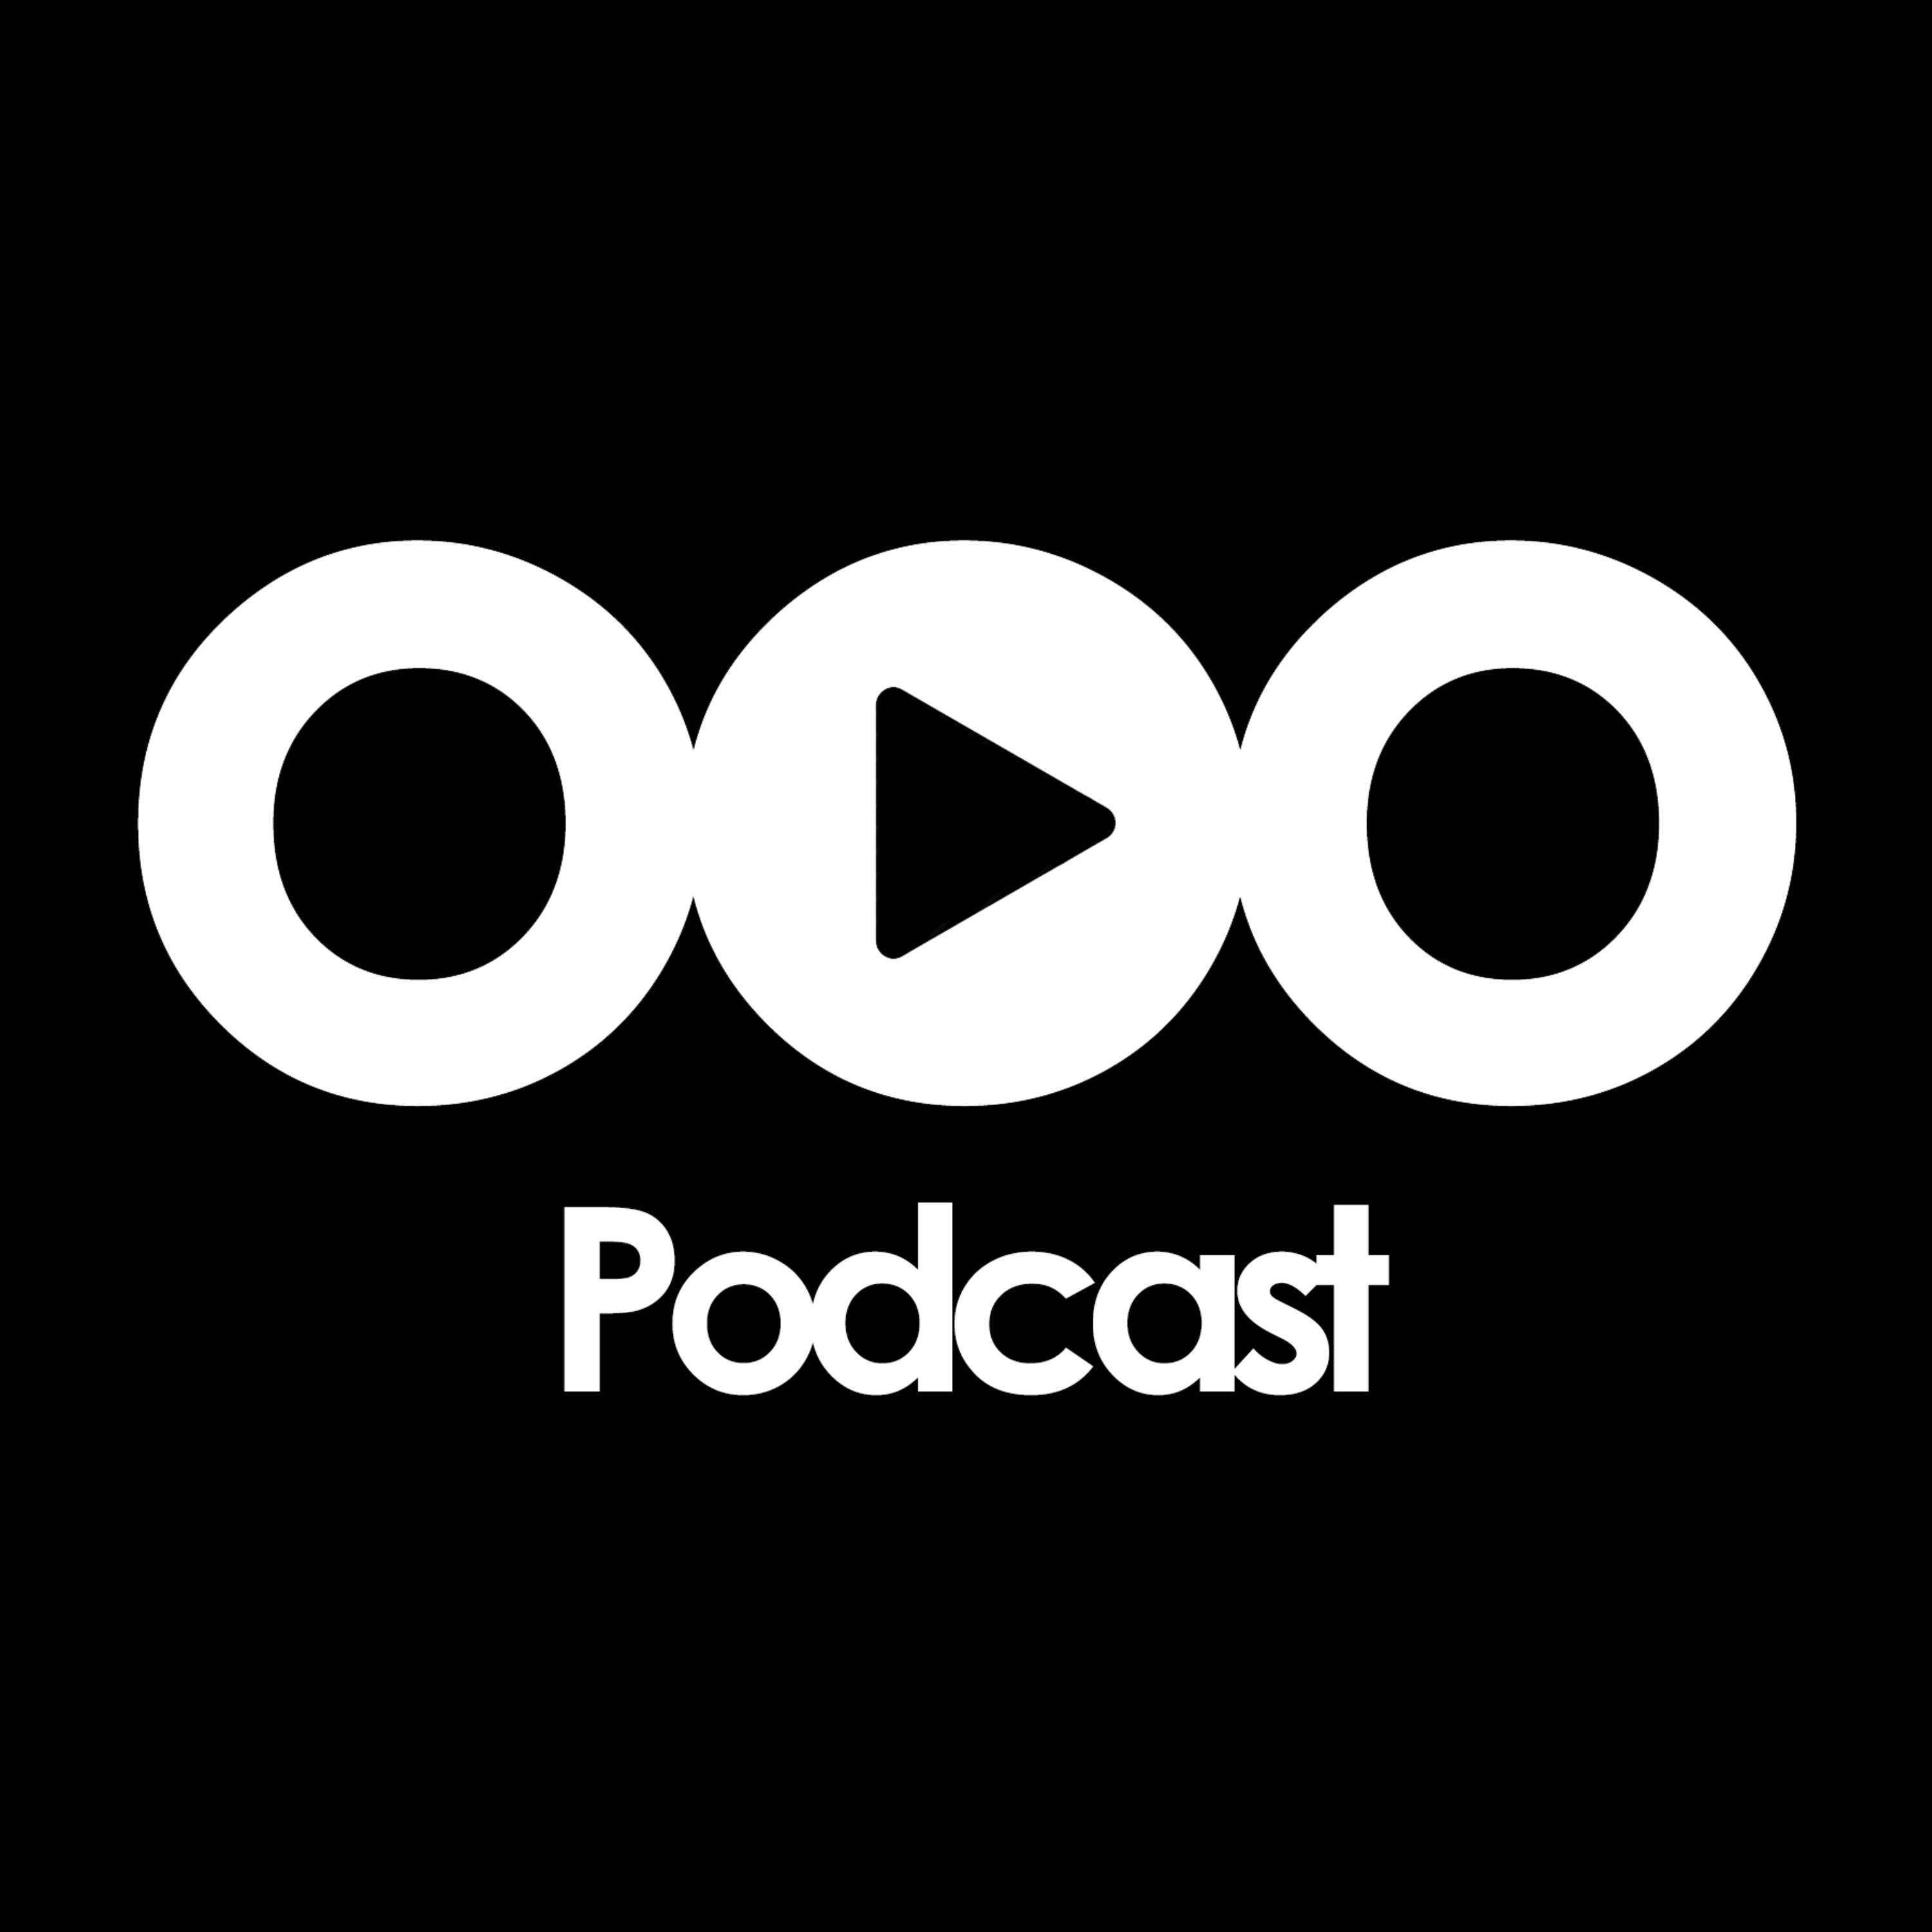 Looopings Podcast logo